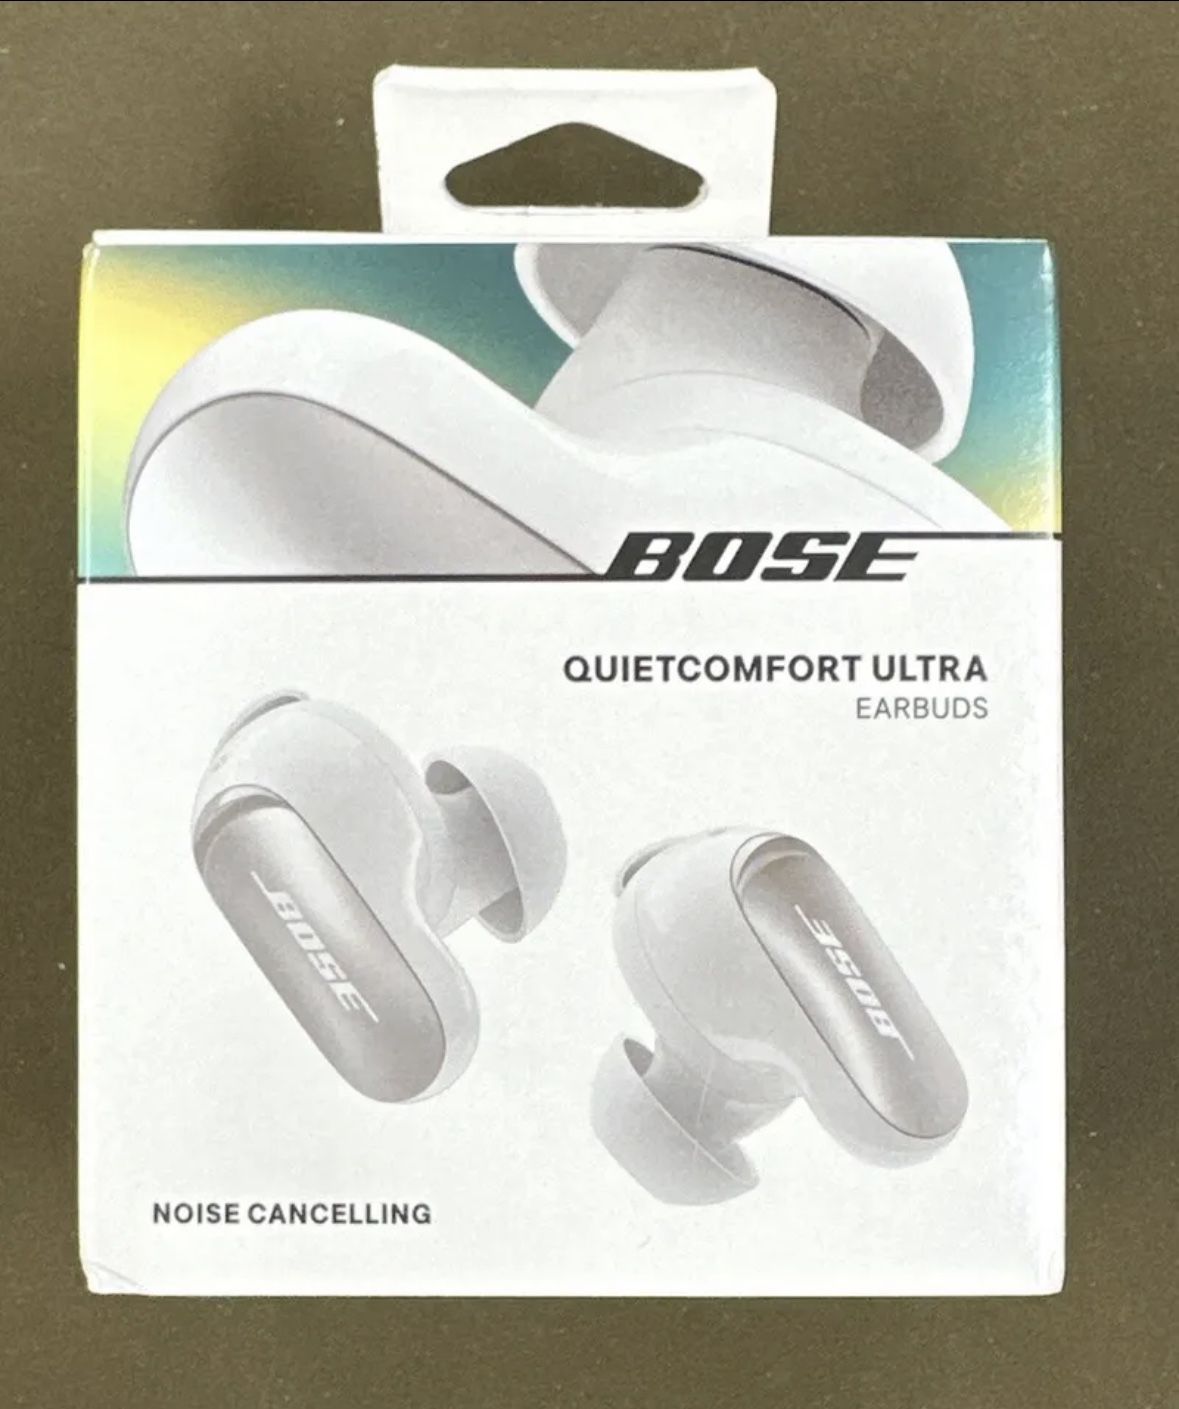 BRAND NEW SEALED Bose QuietComfort Ultra Earbuds - White Brand new, Box unopened